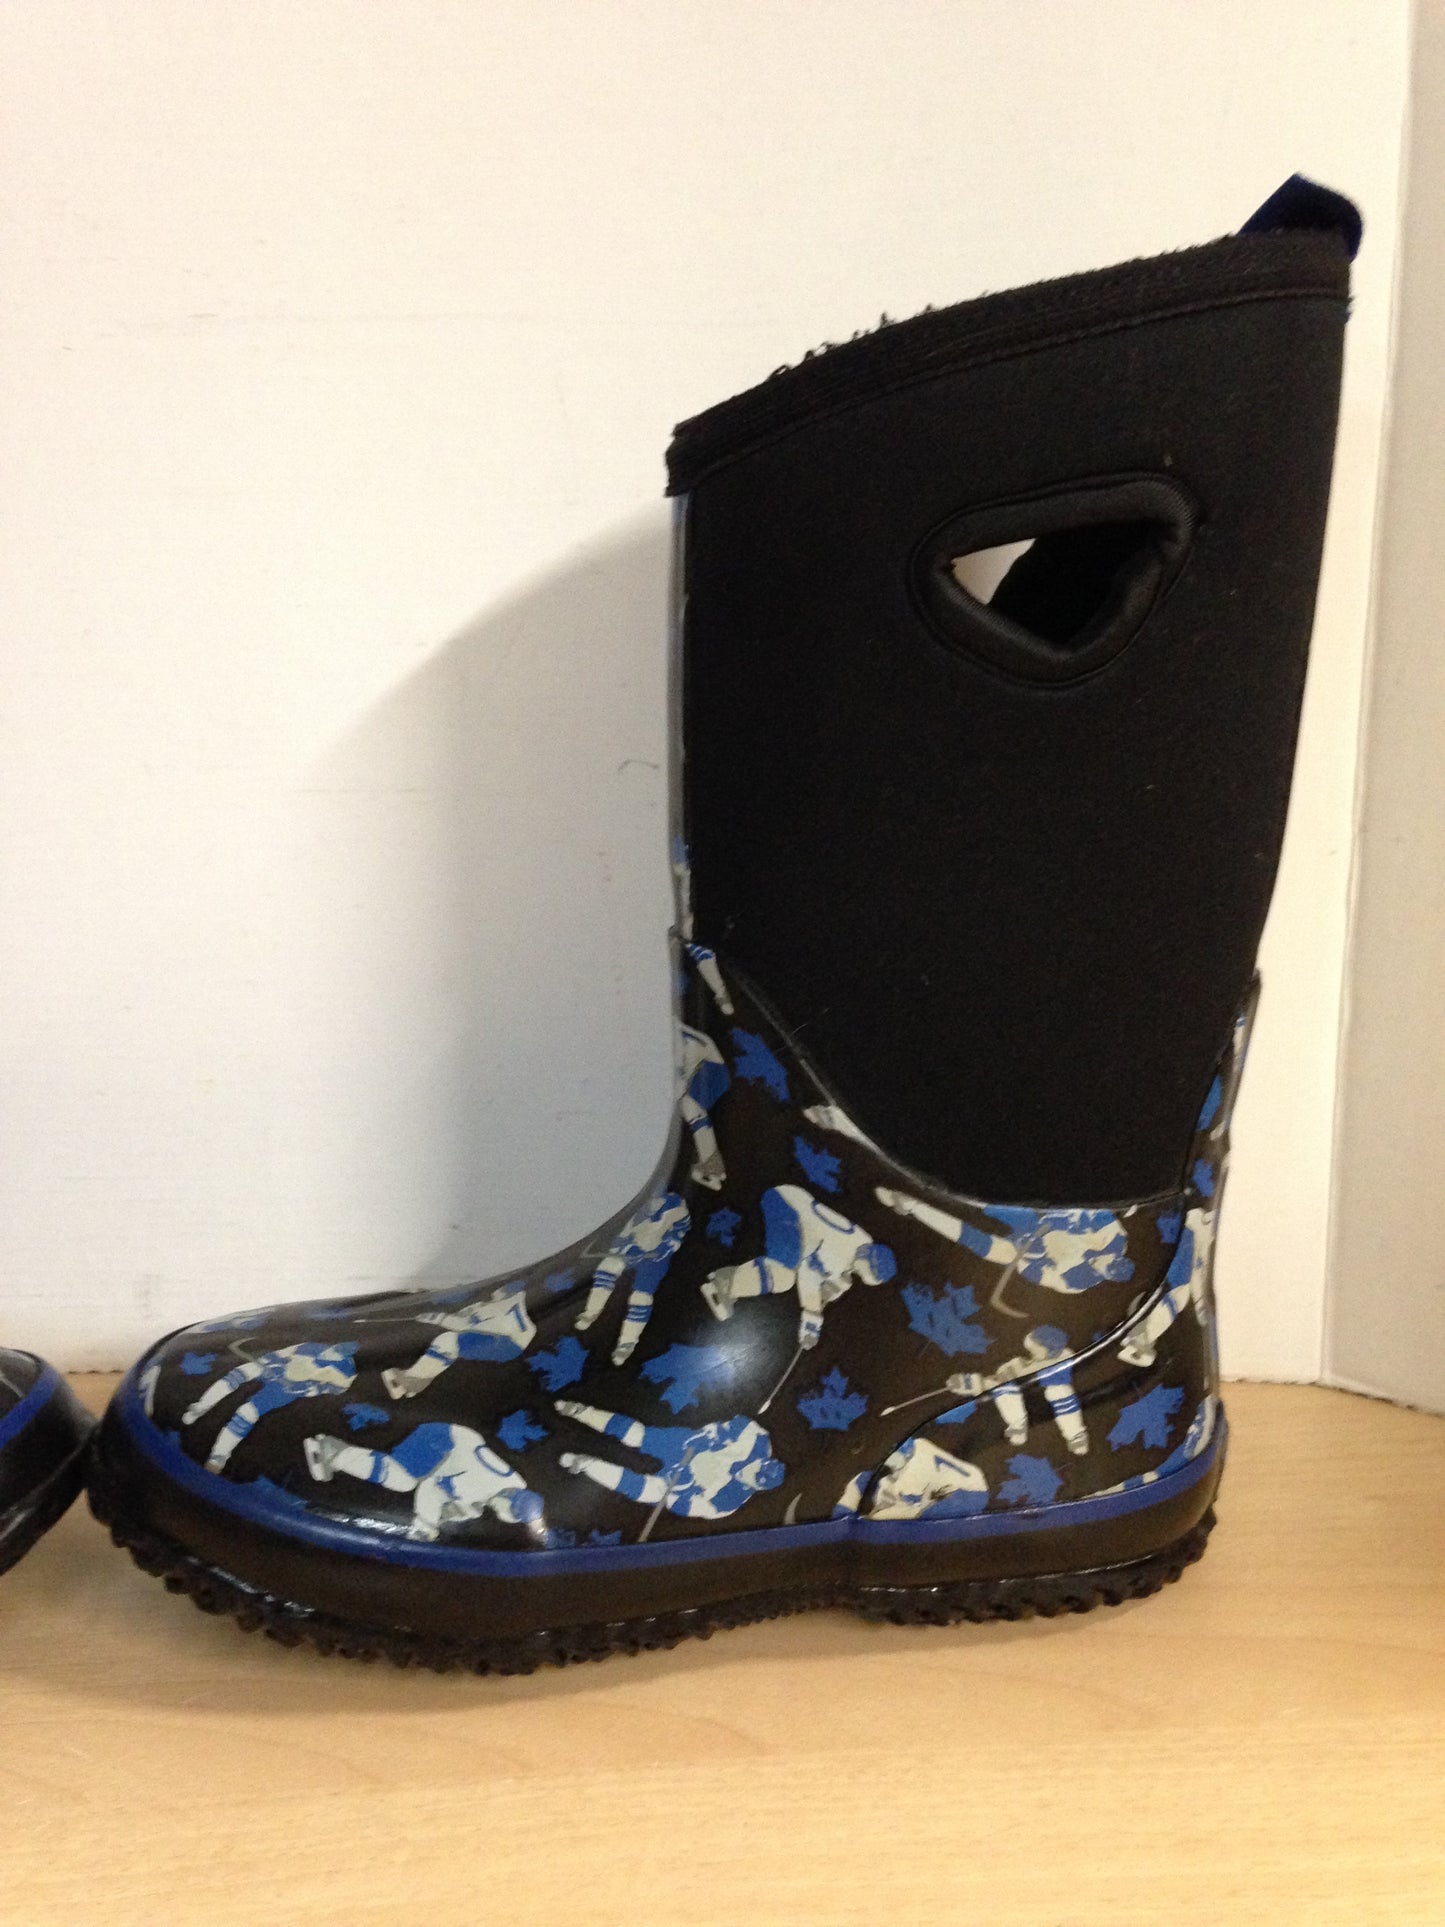 Bogs Style Child Size 4 Storm Neoprene Rubber Rain Winter Boots Waterproof Black Blue Hockey Excellent